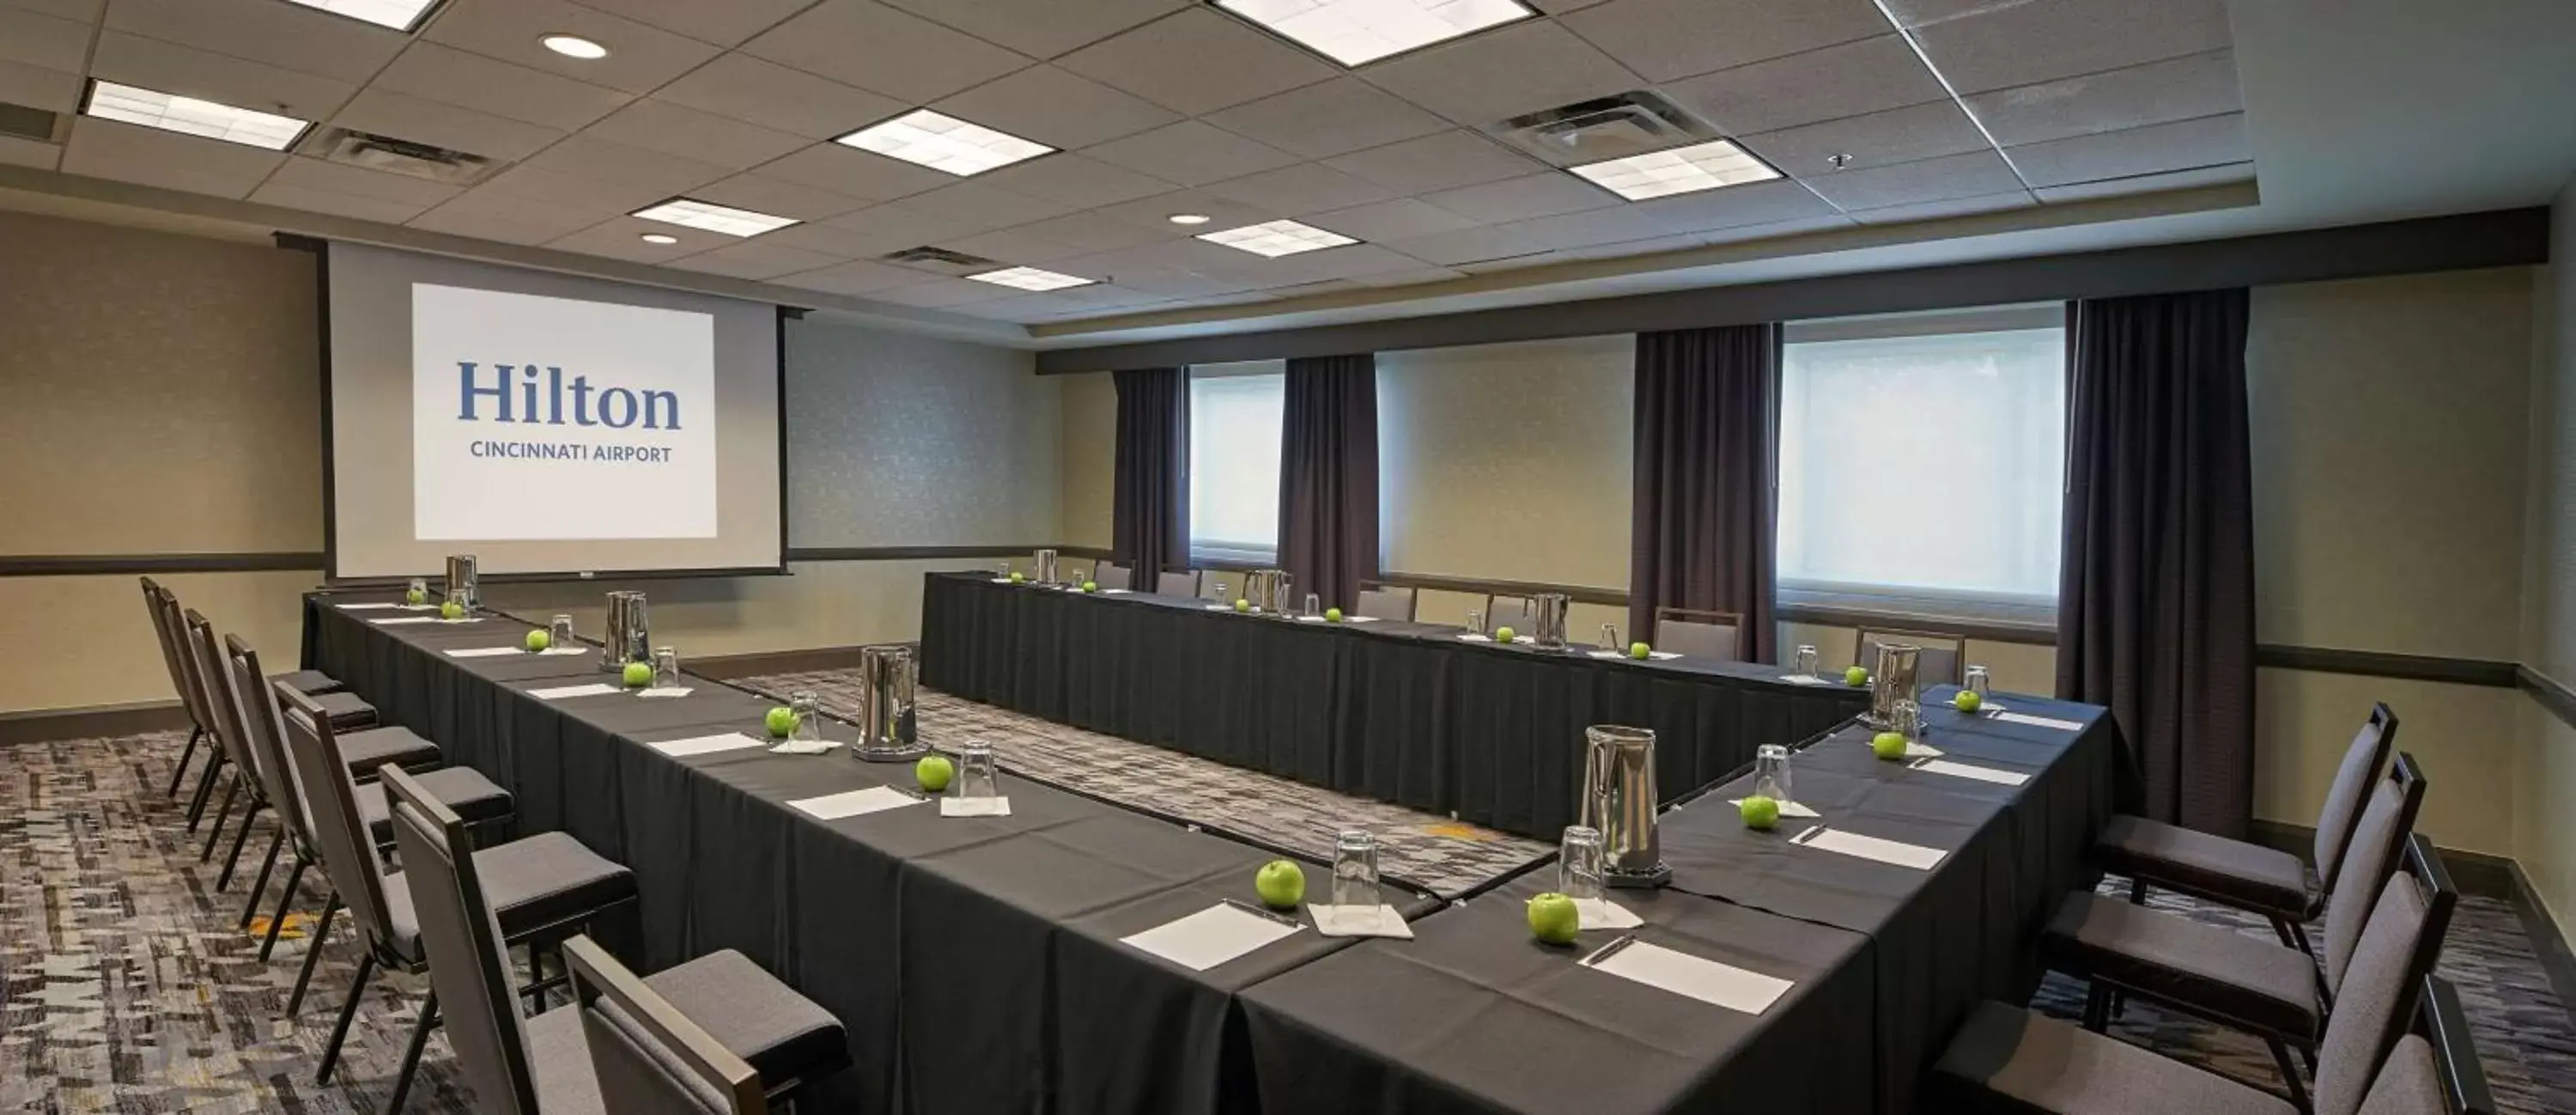 Meeting/conference room in Hilton Cincinnati Airport